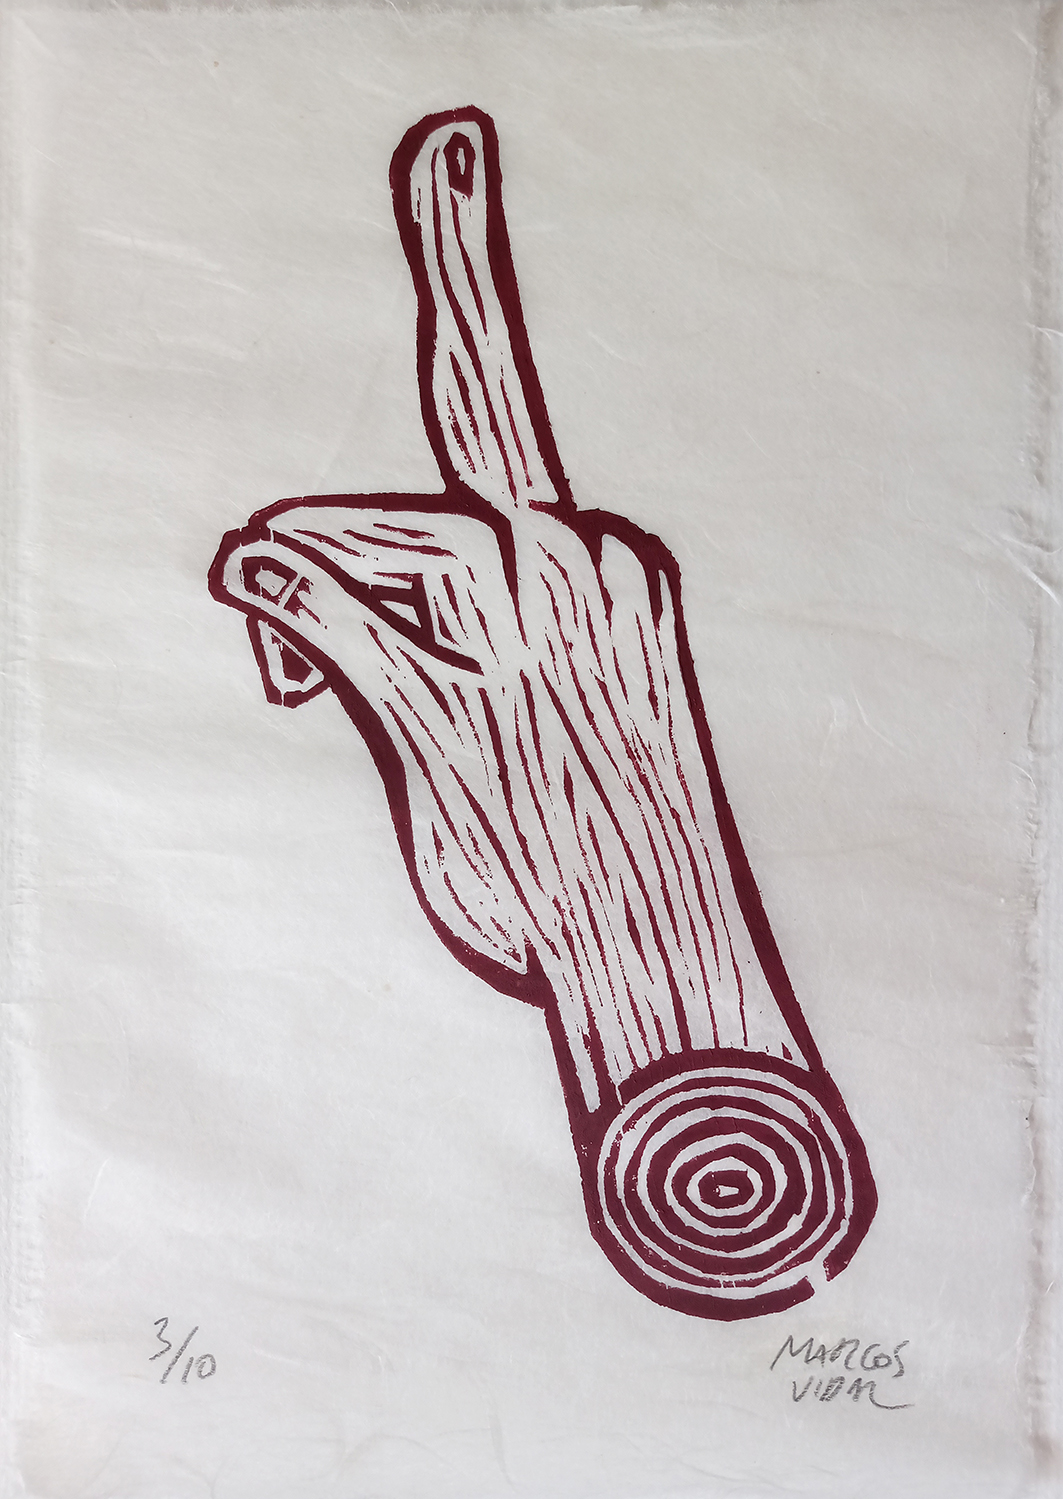 xilografía estampada a mano sobre papel japonés, 23 x 15 cms, 2022